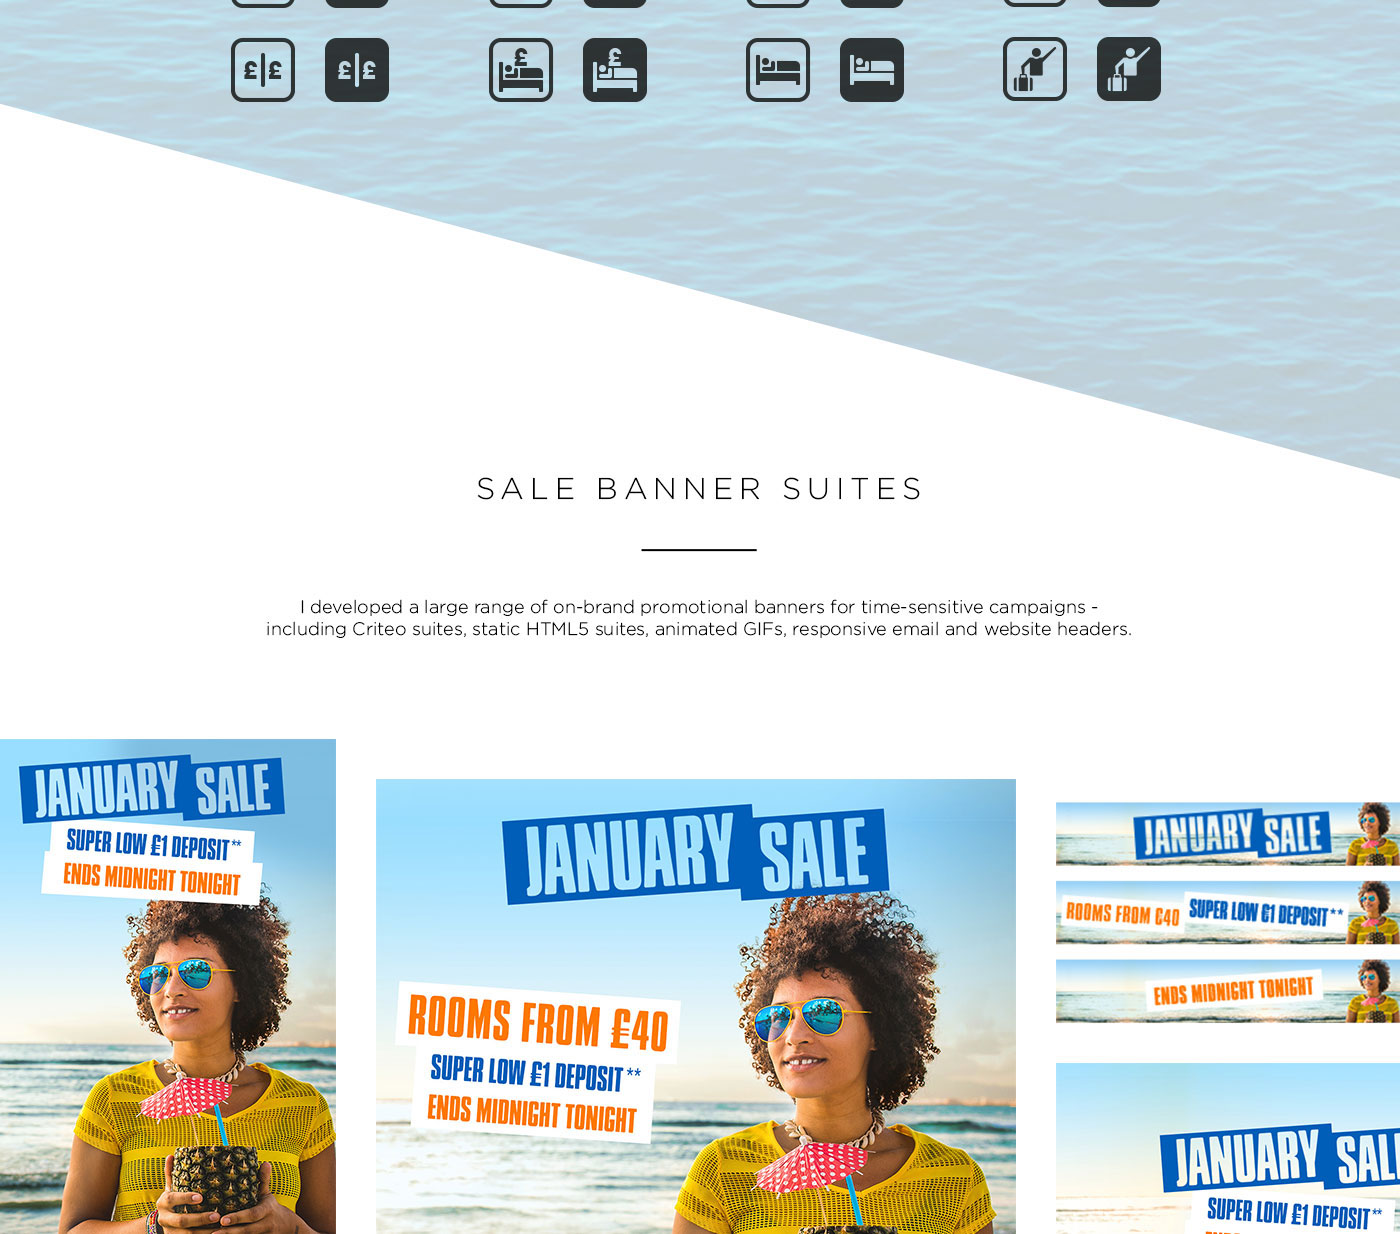 Travel app website banners HTML5 Suite criteo icon design 